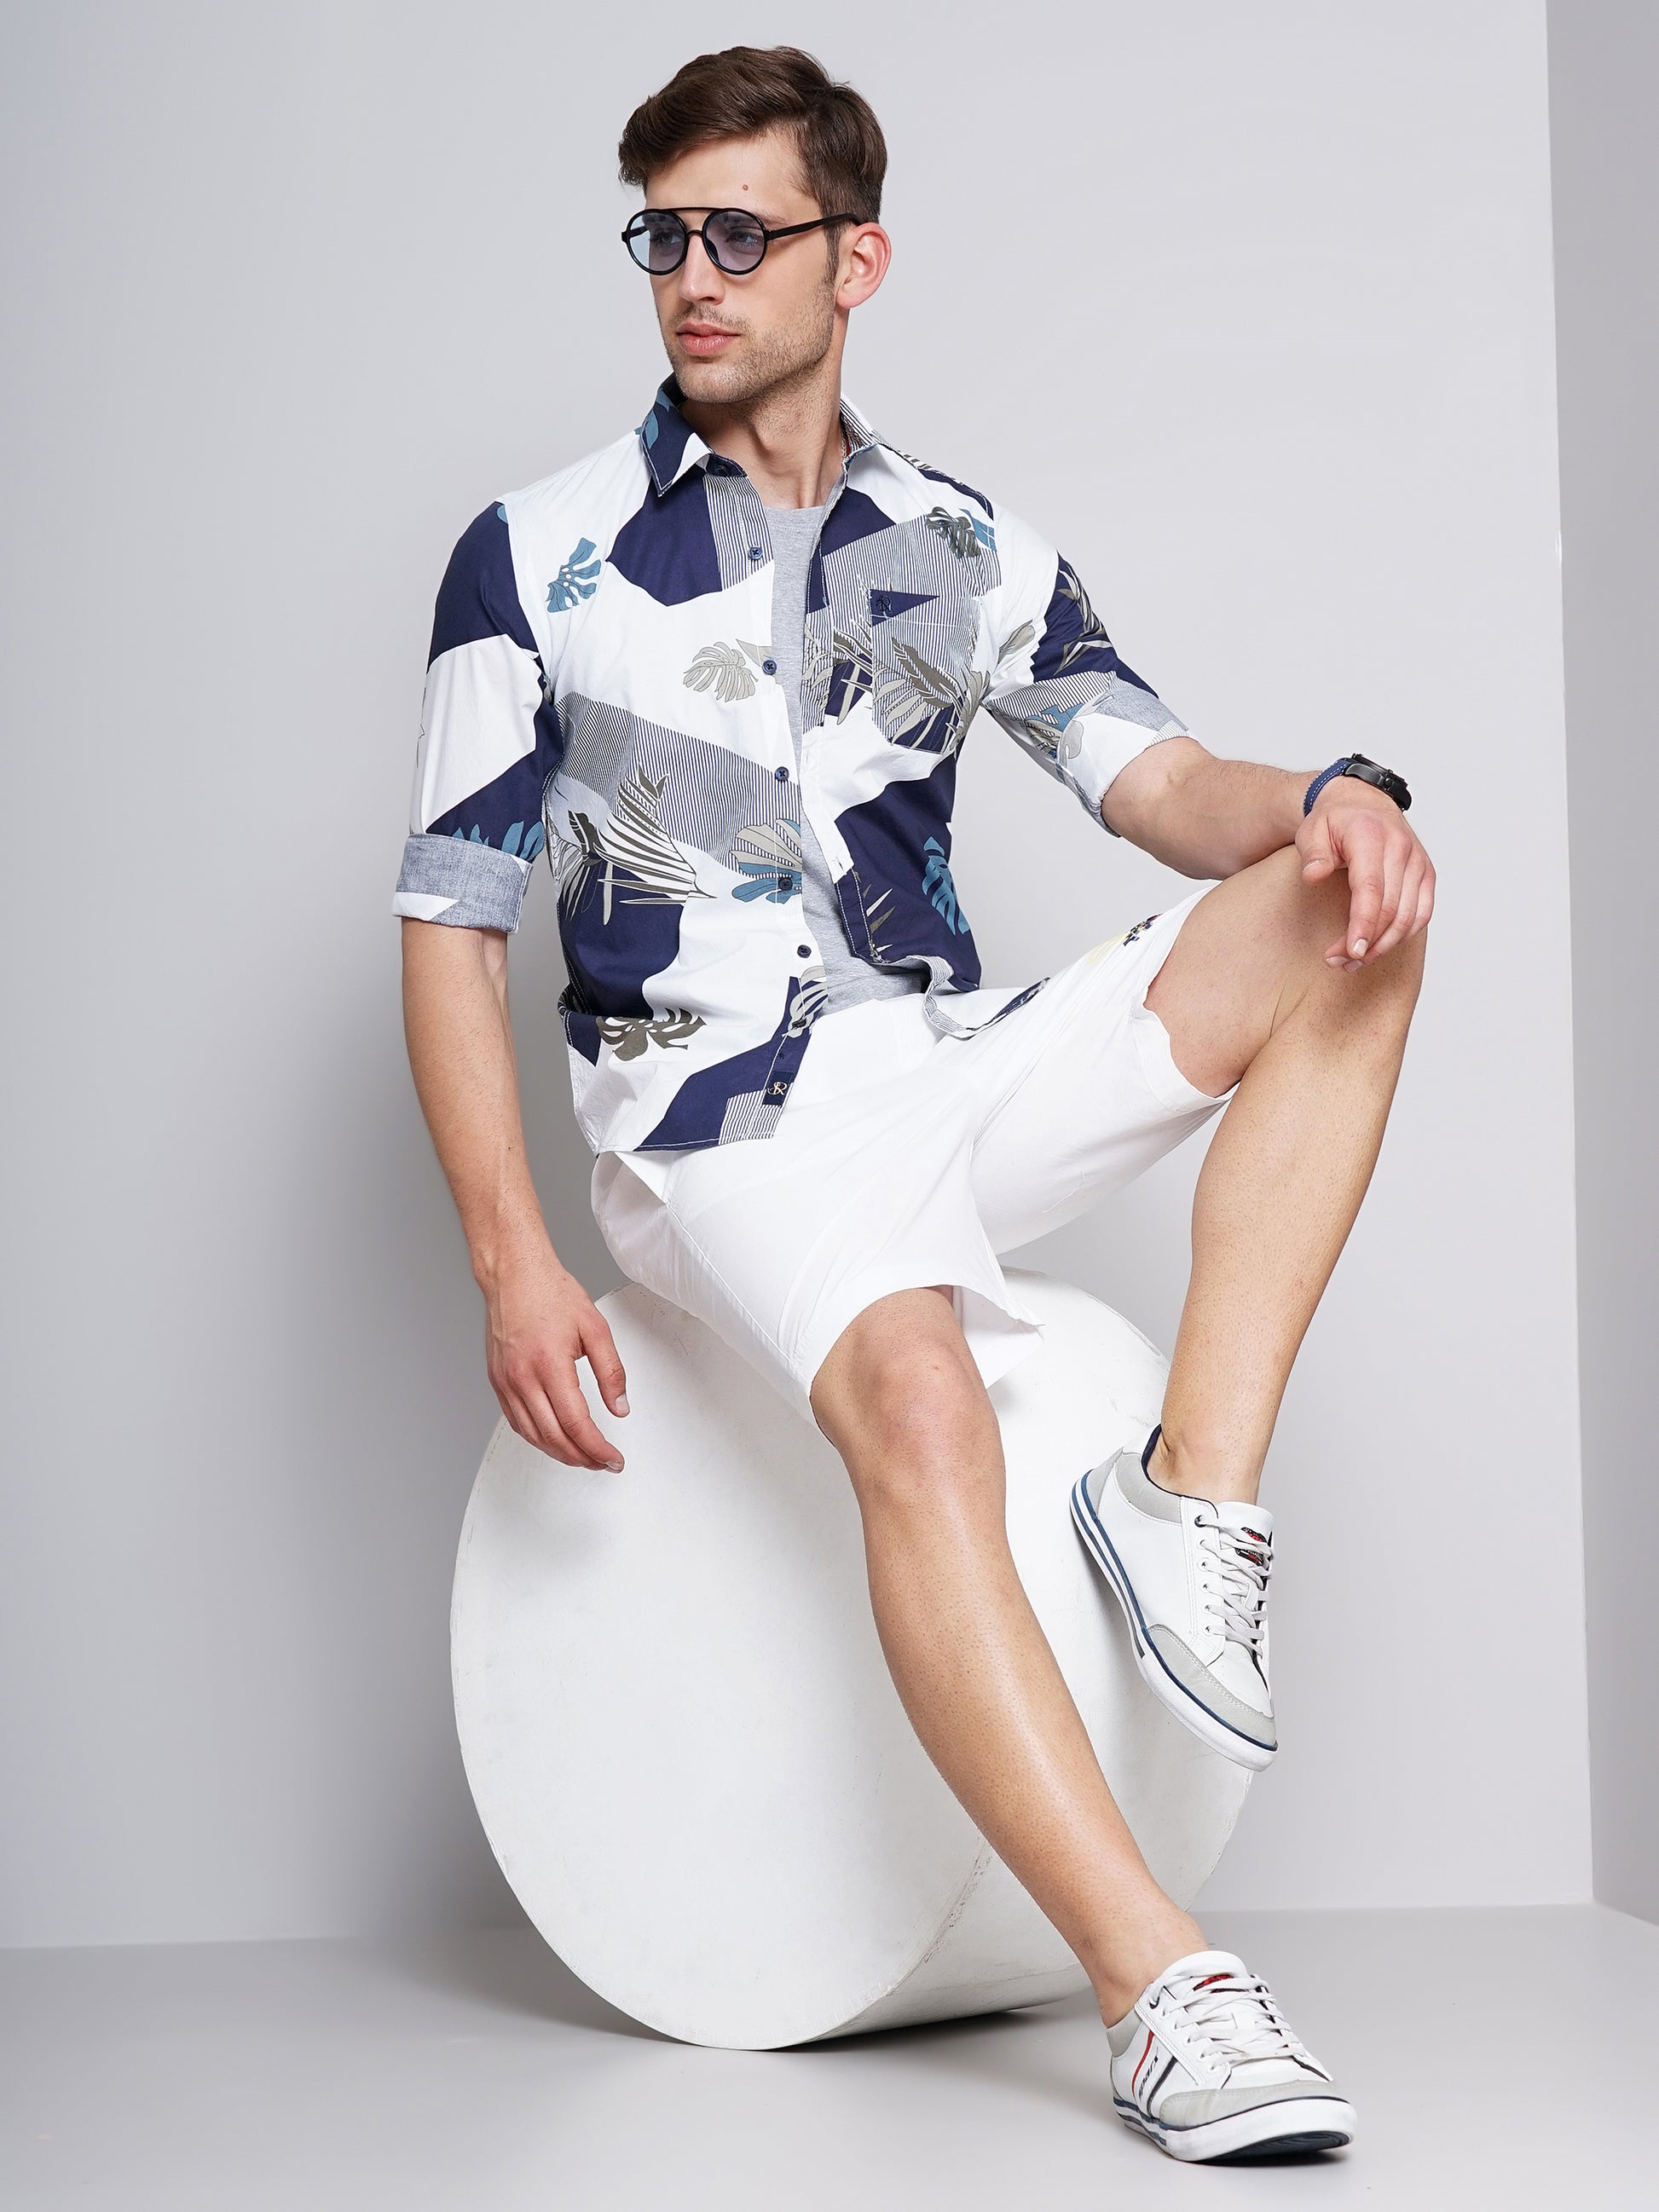 Tropical Leaves Navy & White Printed Shirt for Men 